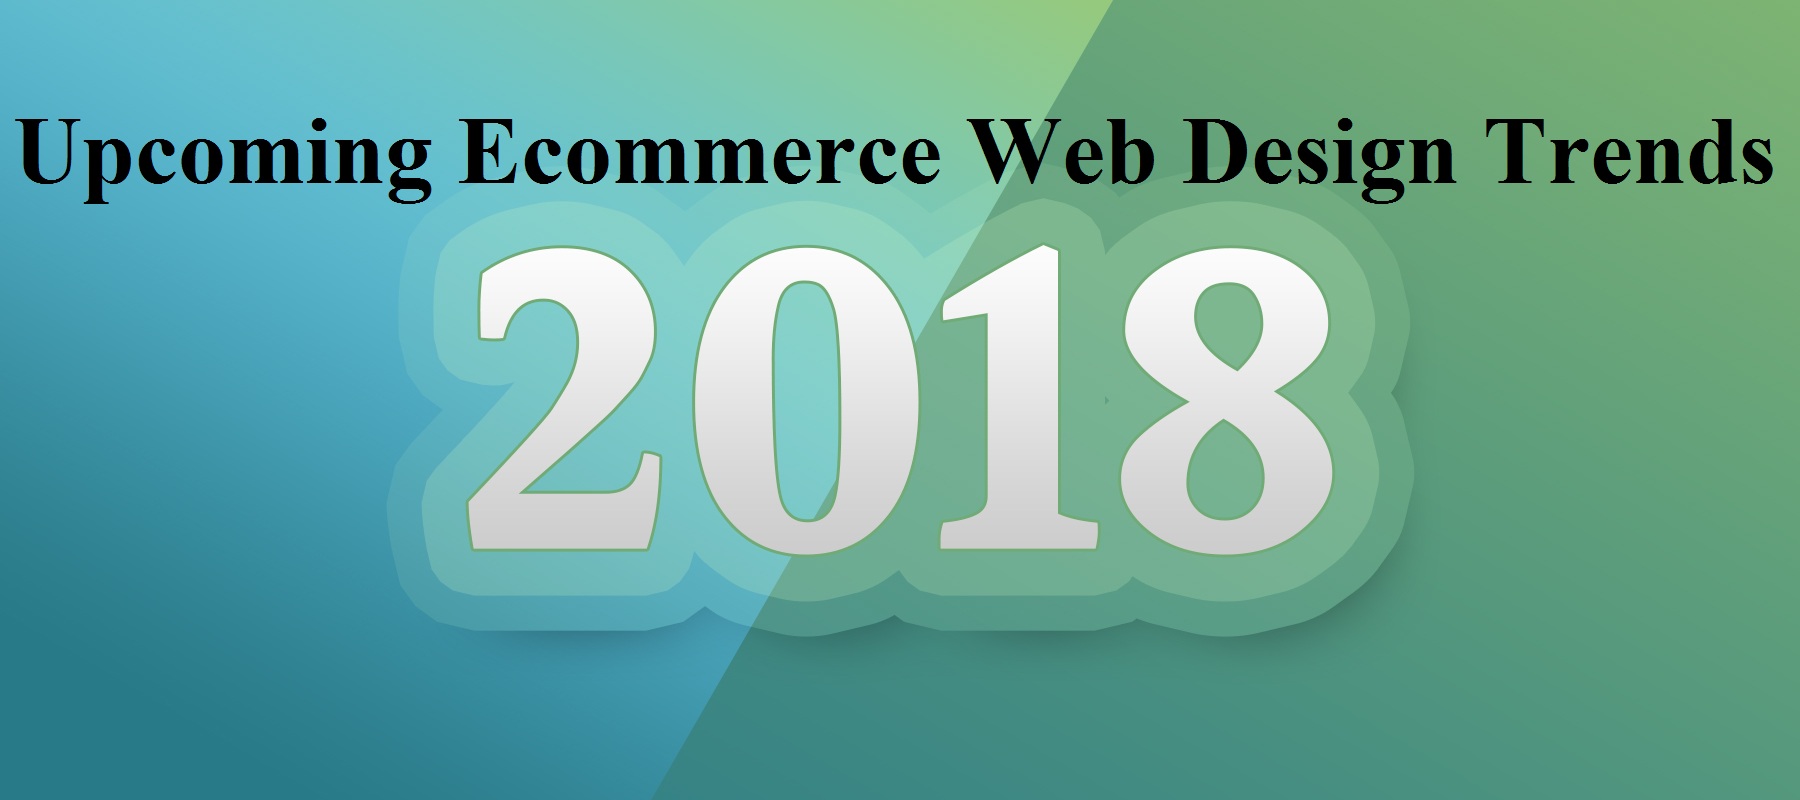 Ecommerce Web Design Trends